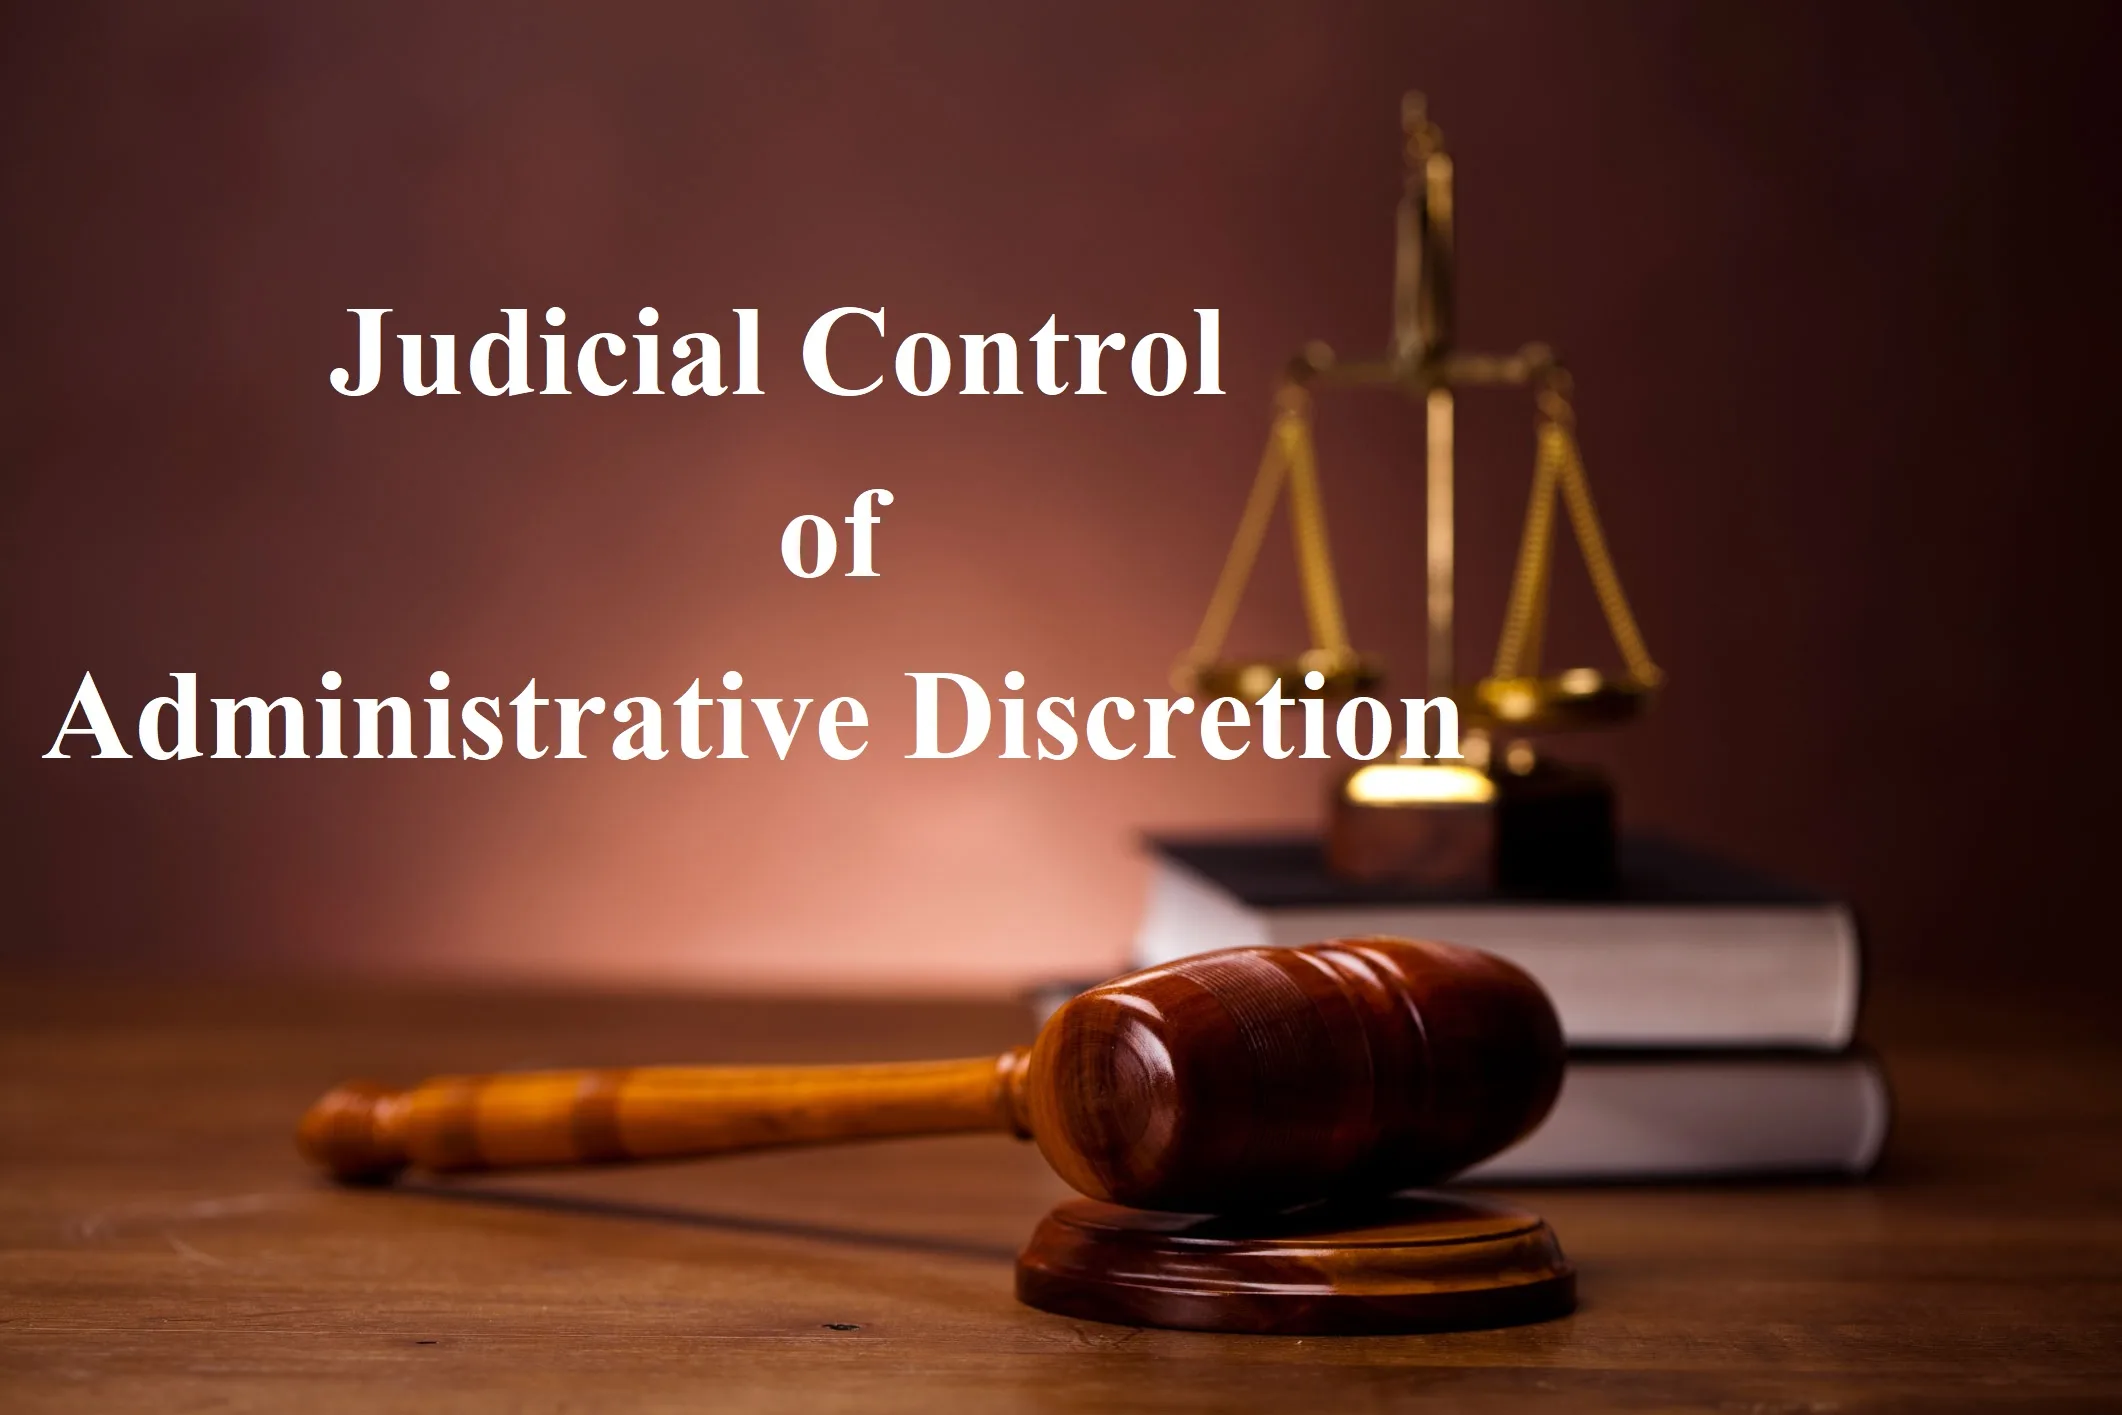 Judicial Control of Administrative Discretion- Delegation of Discretion